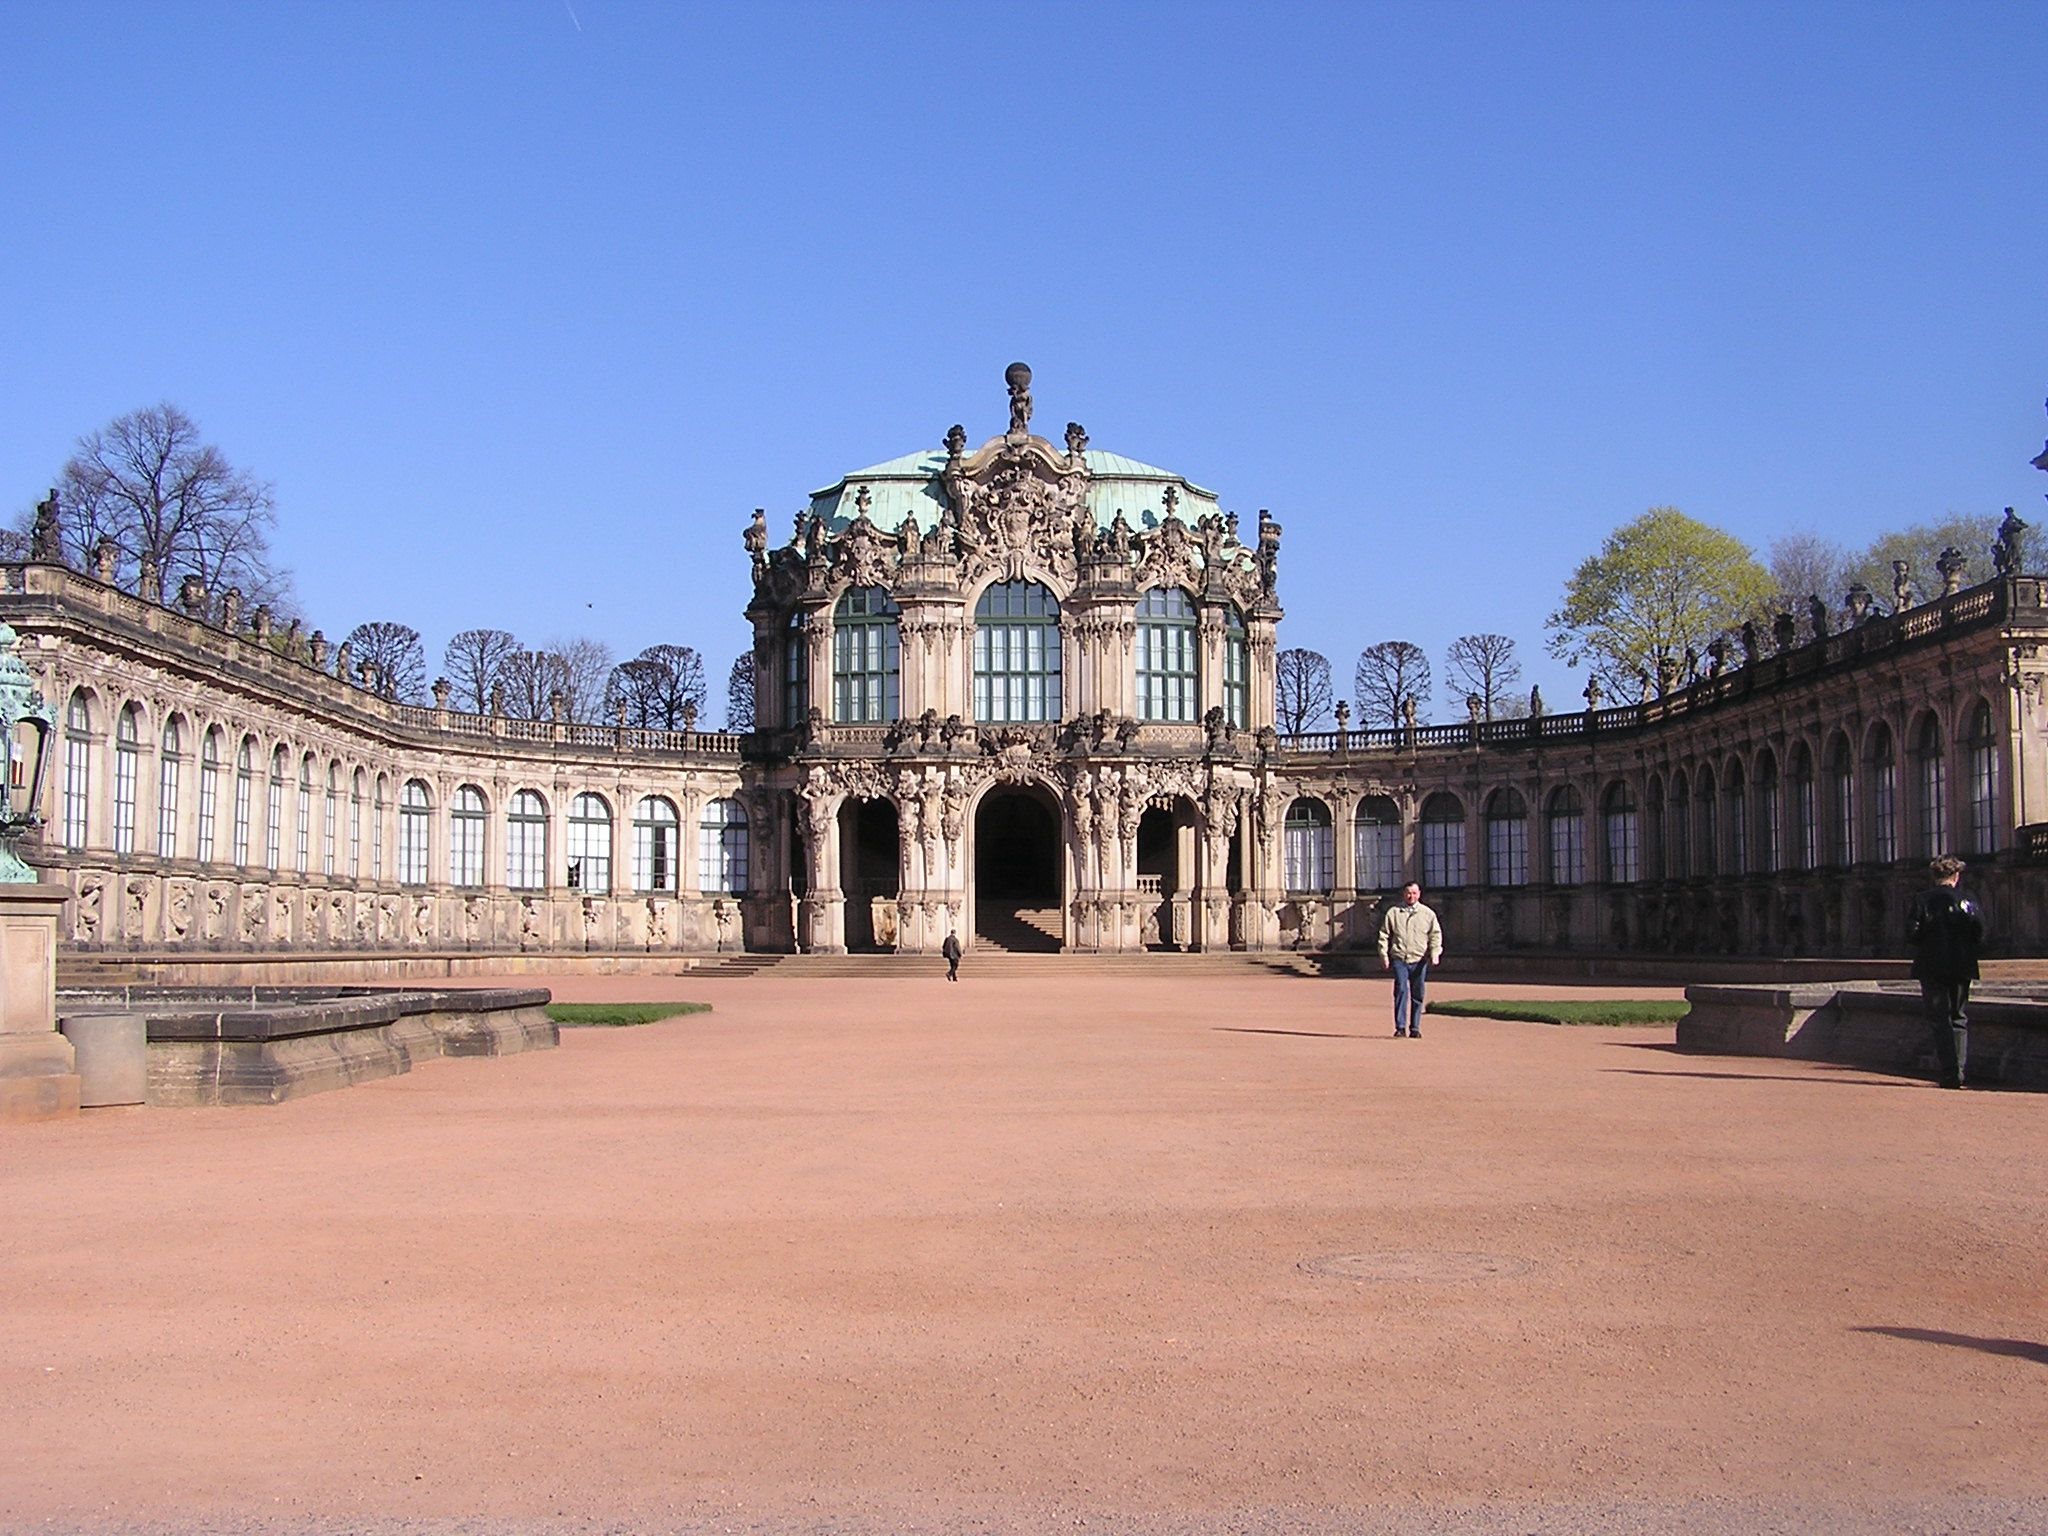 Wallpavillon vom Zwinger in Dresden.
